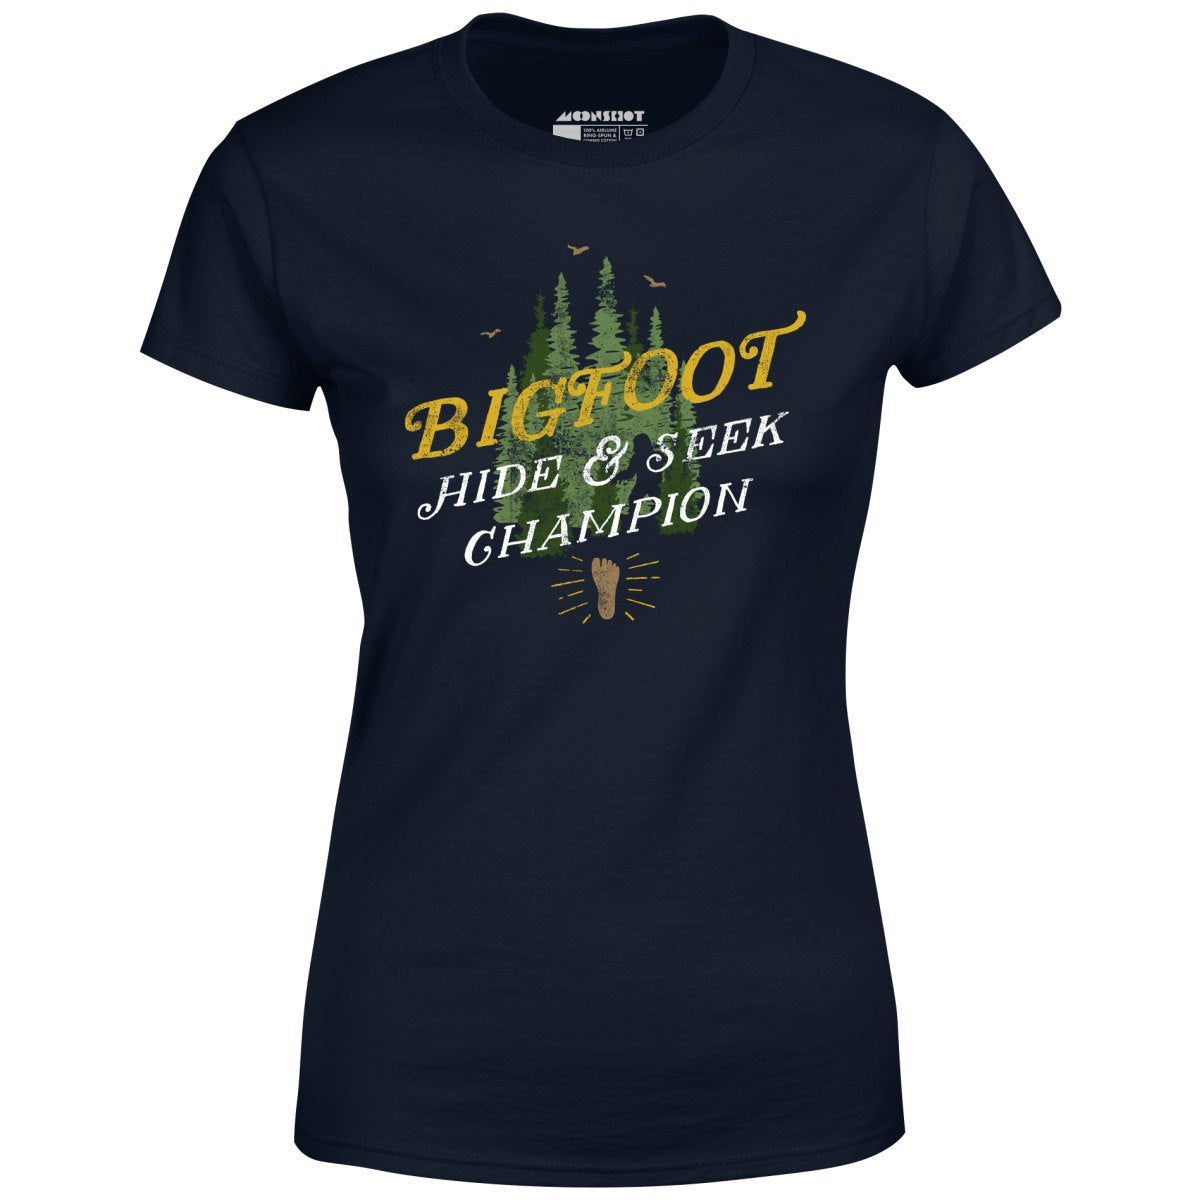 Bigfoot Hide & Seek Champion - Women's T-Shirt